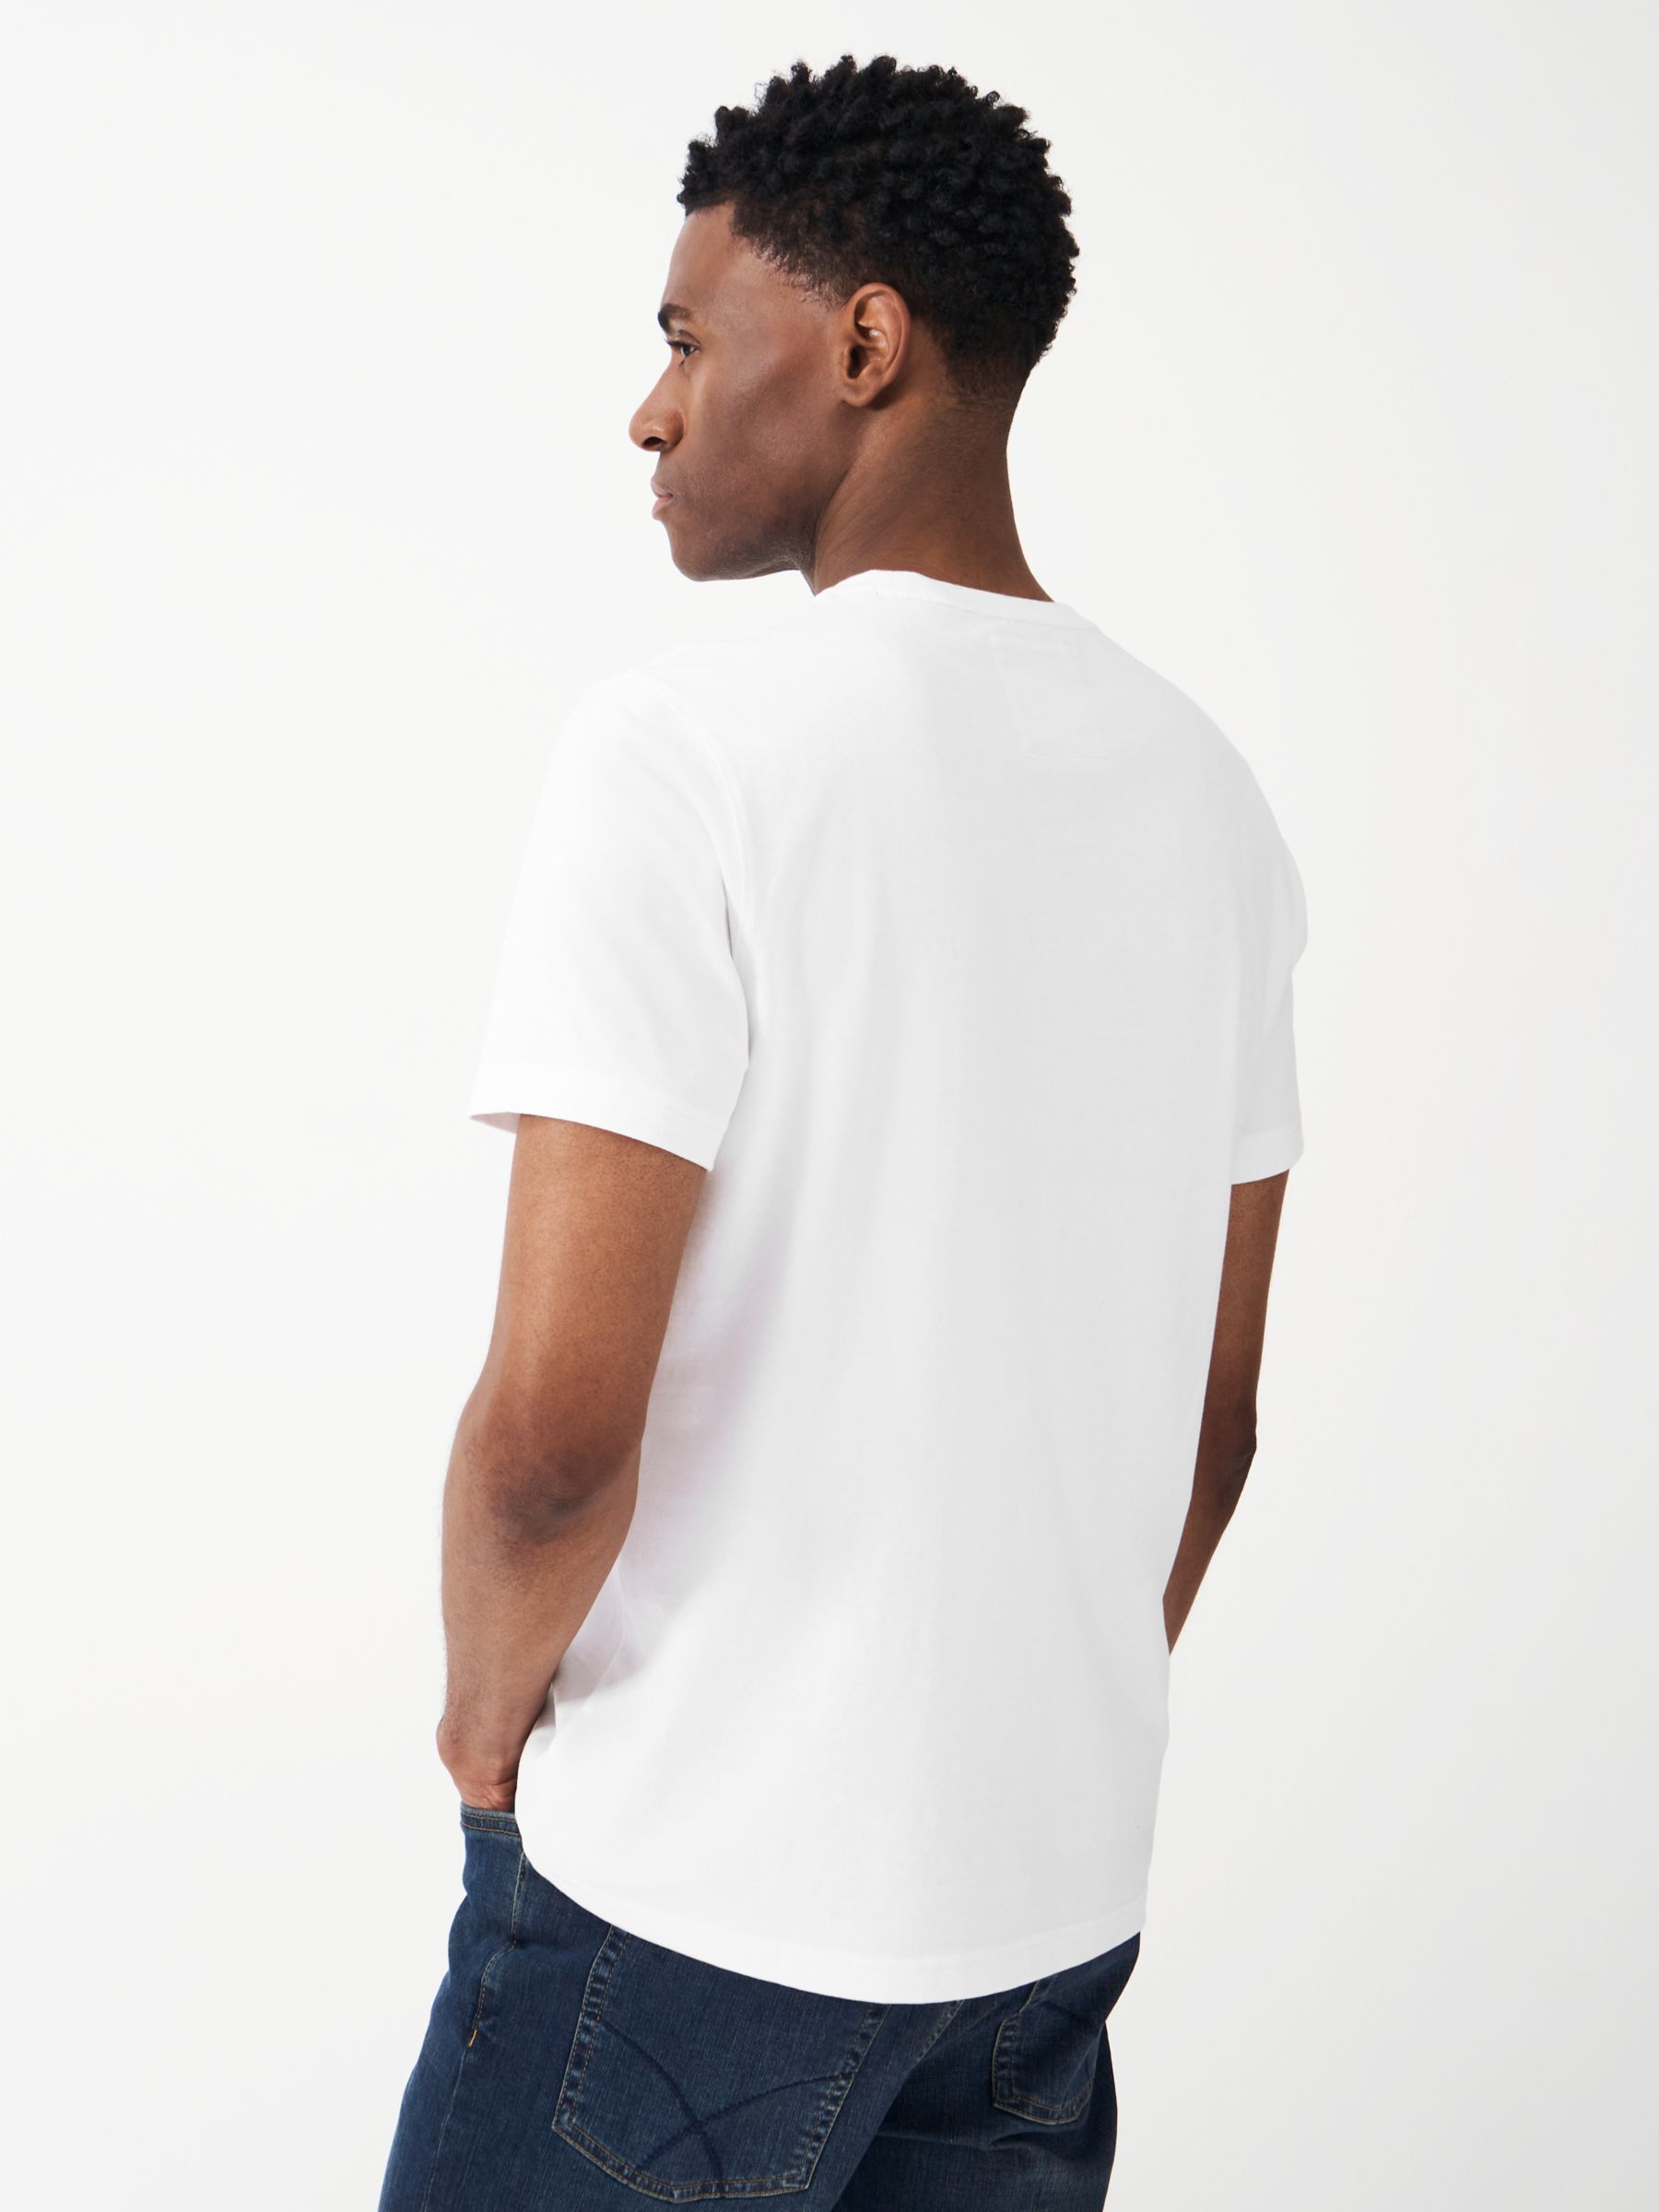 Crew Clothing Classic Cotton T-Shirt, White, L